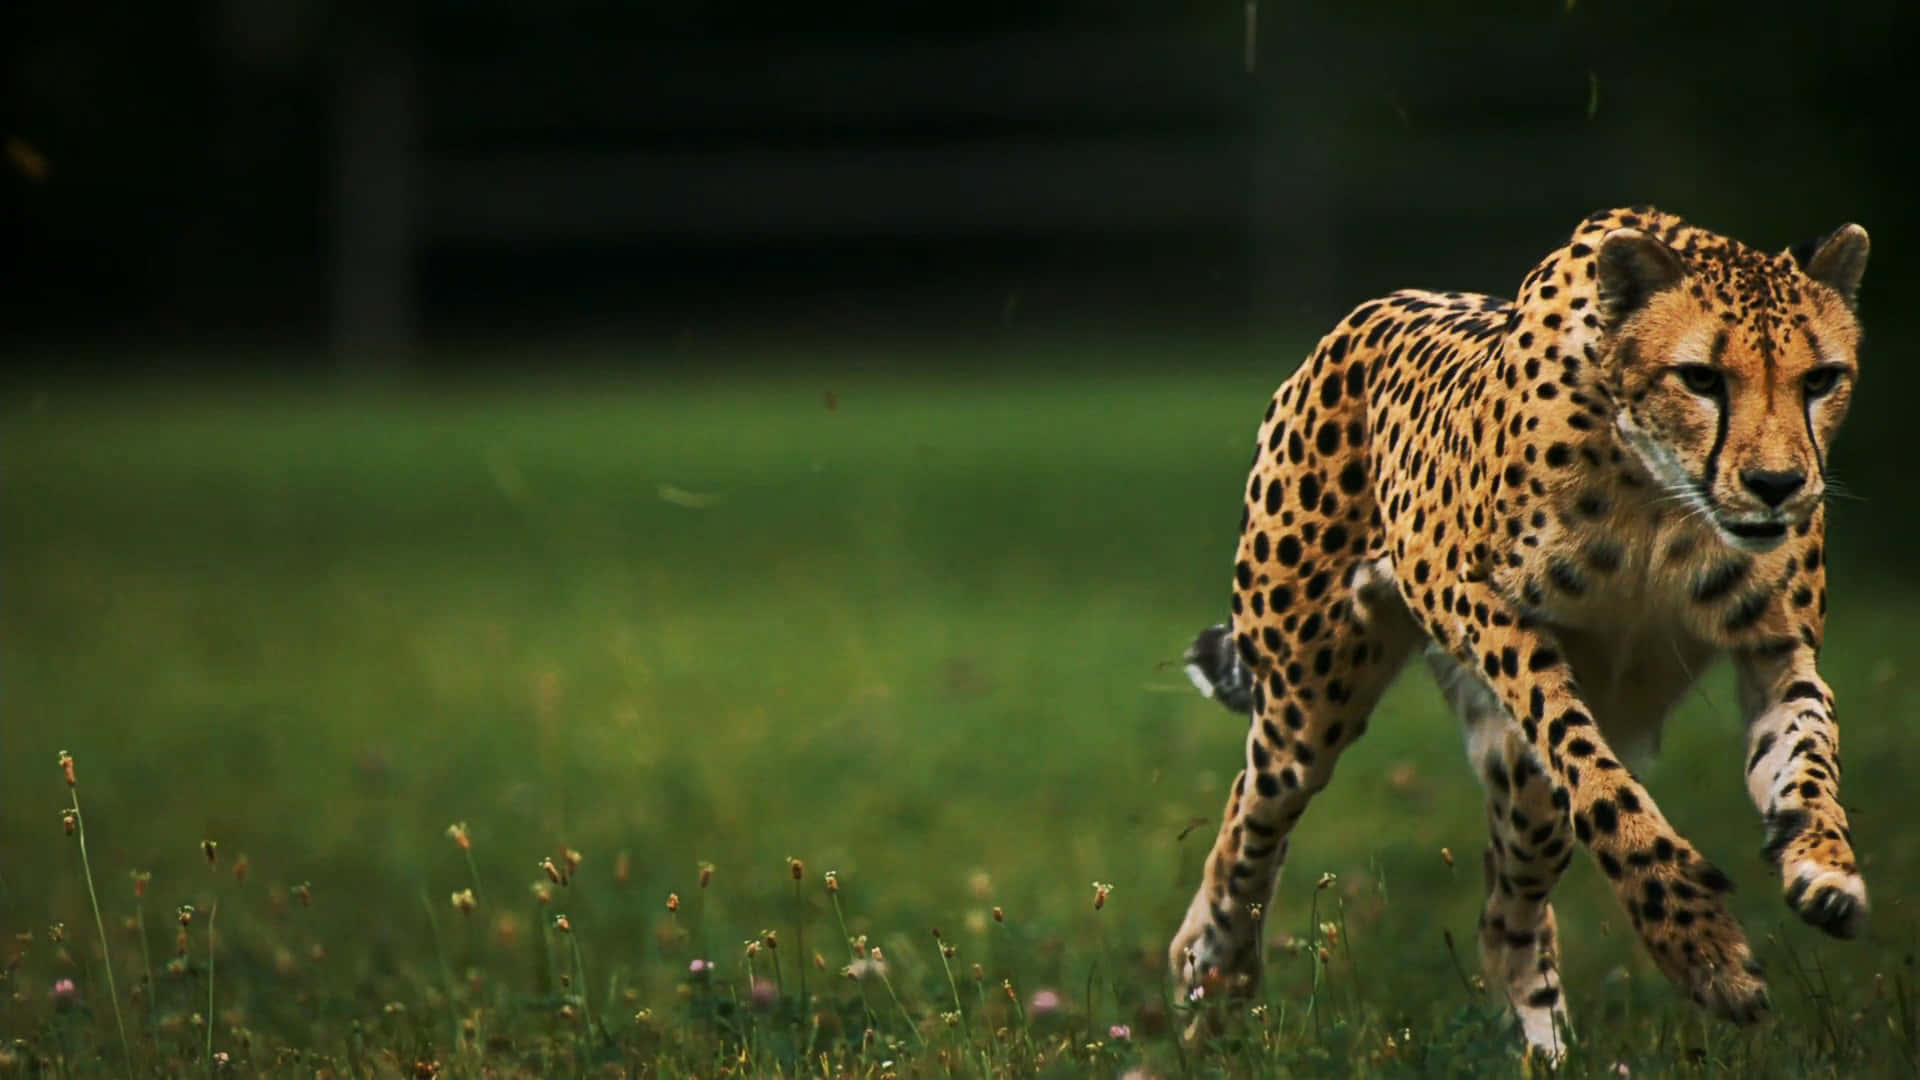 A Cheetah Prowling in Its Natural Habitat